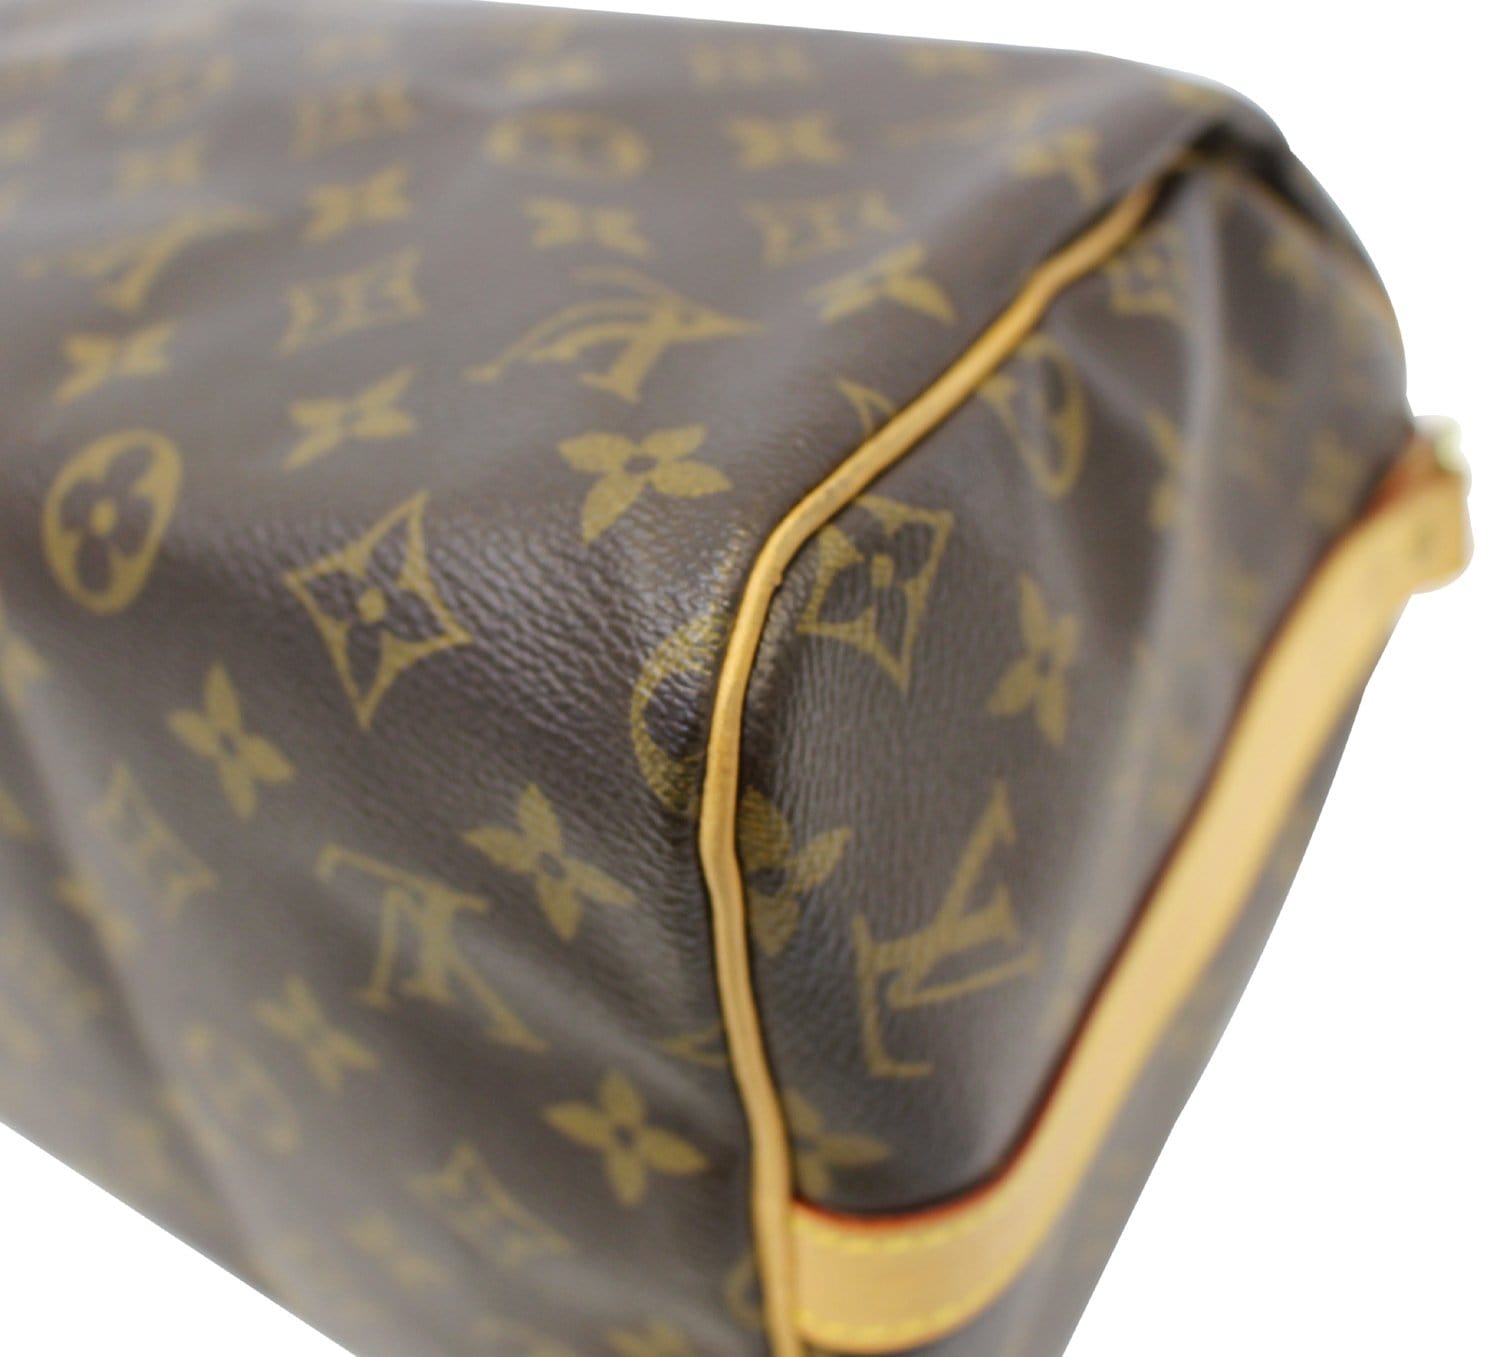 Louis Vuitton Speedy 30 Bandouliere Monogram with Strap 872689a Brown  Coated Canvas Shoulder Bag, Louis Vuitton